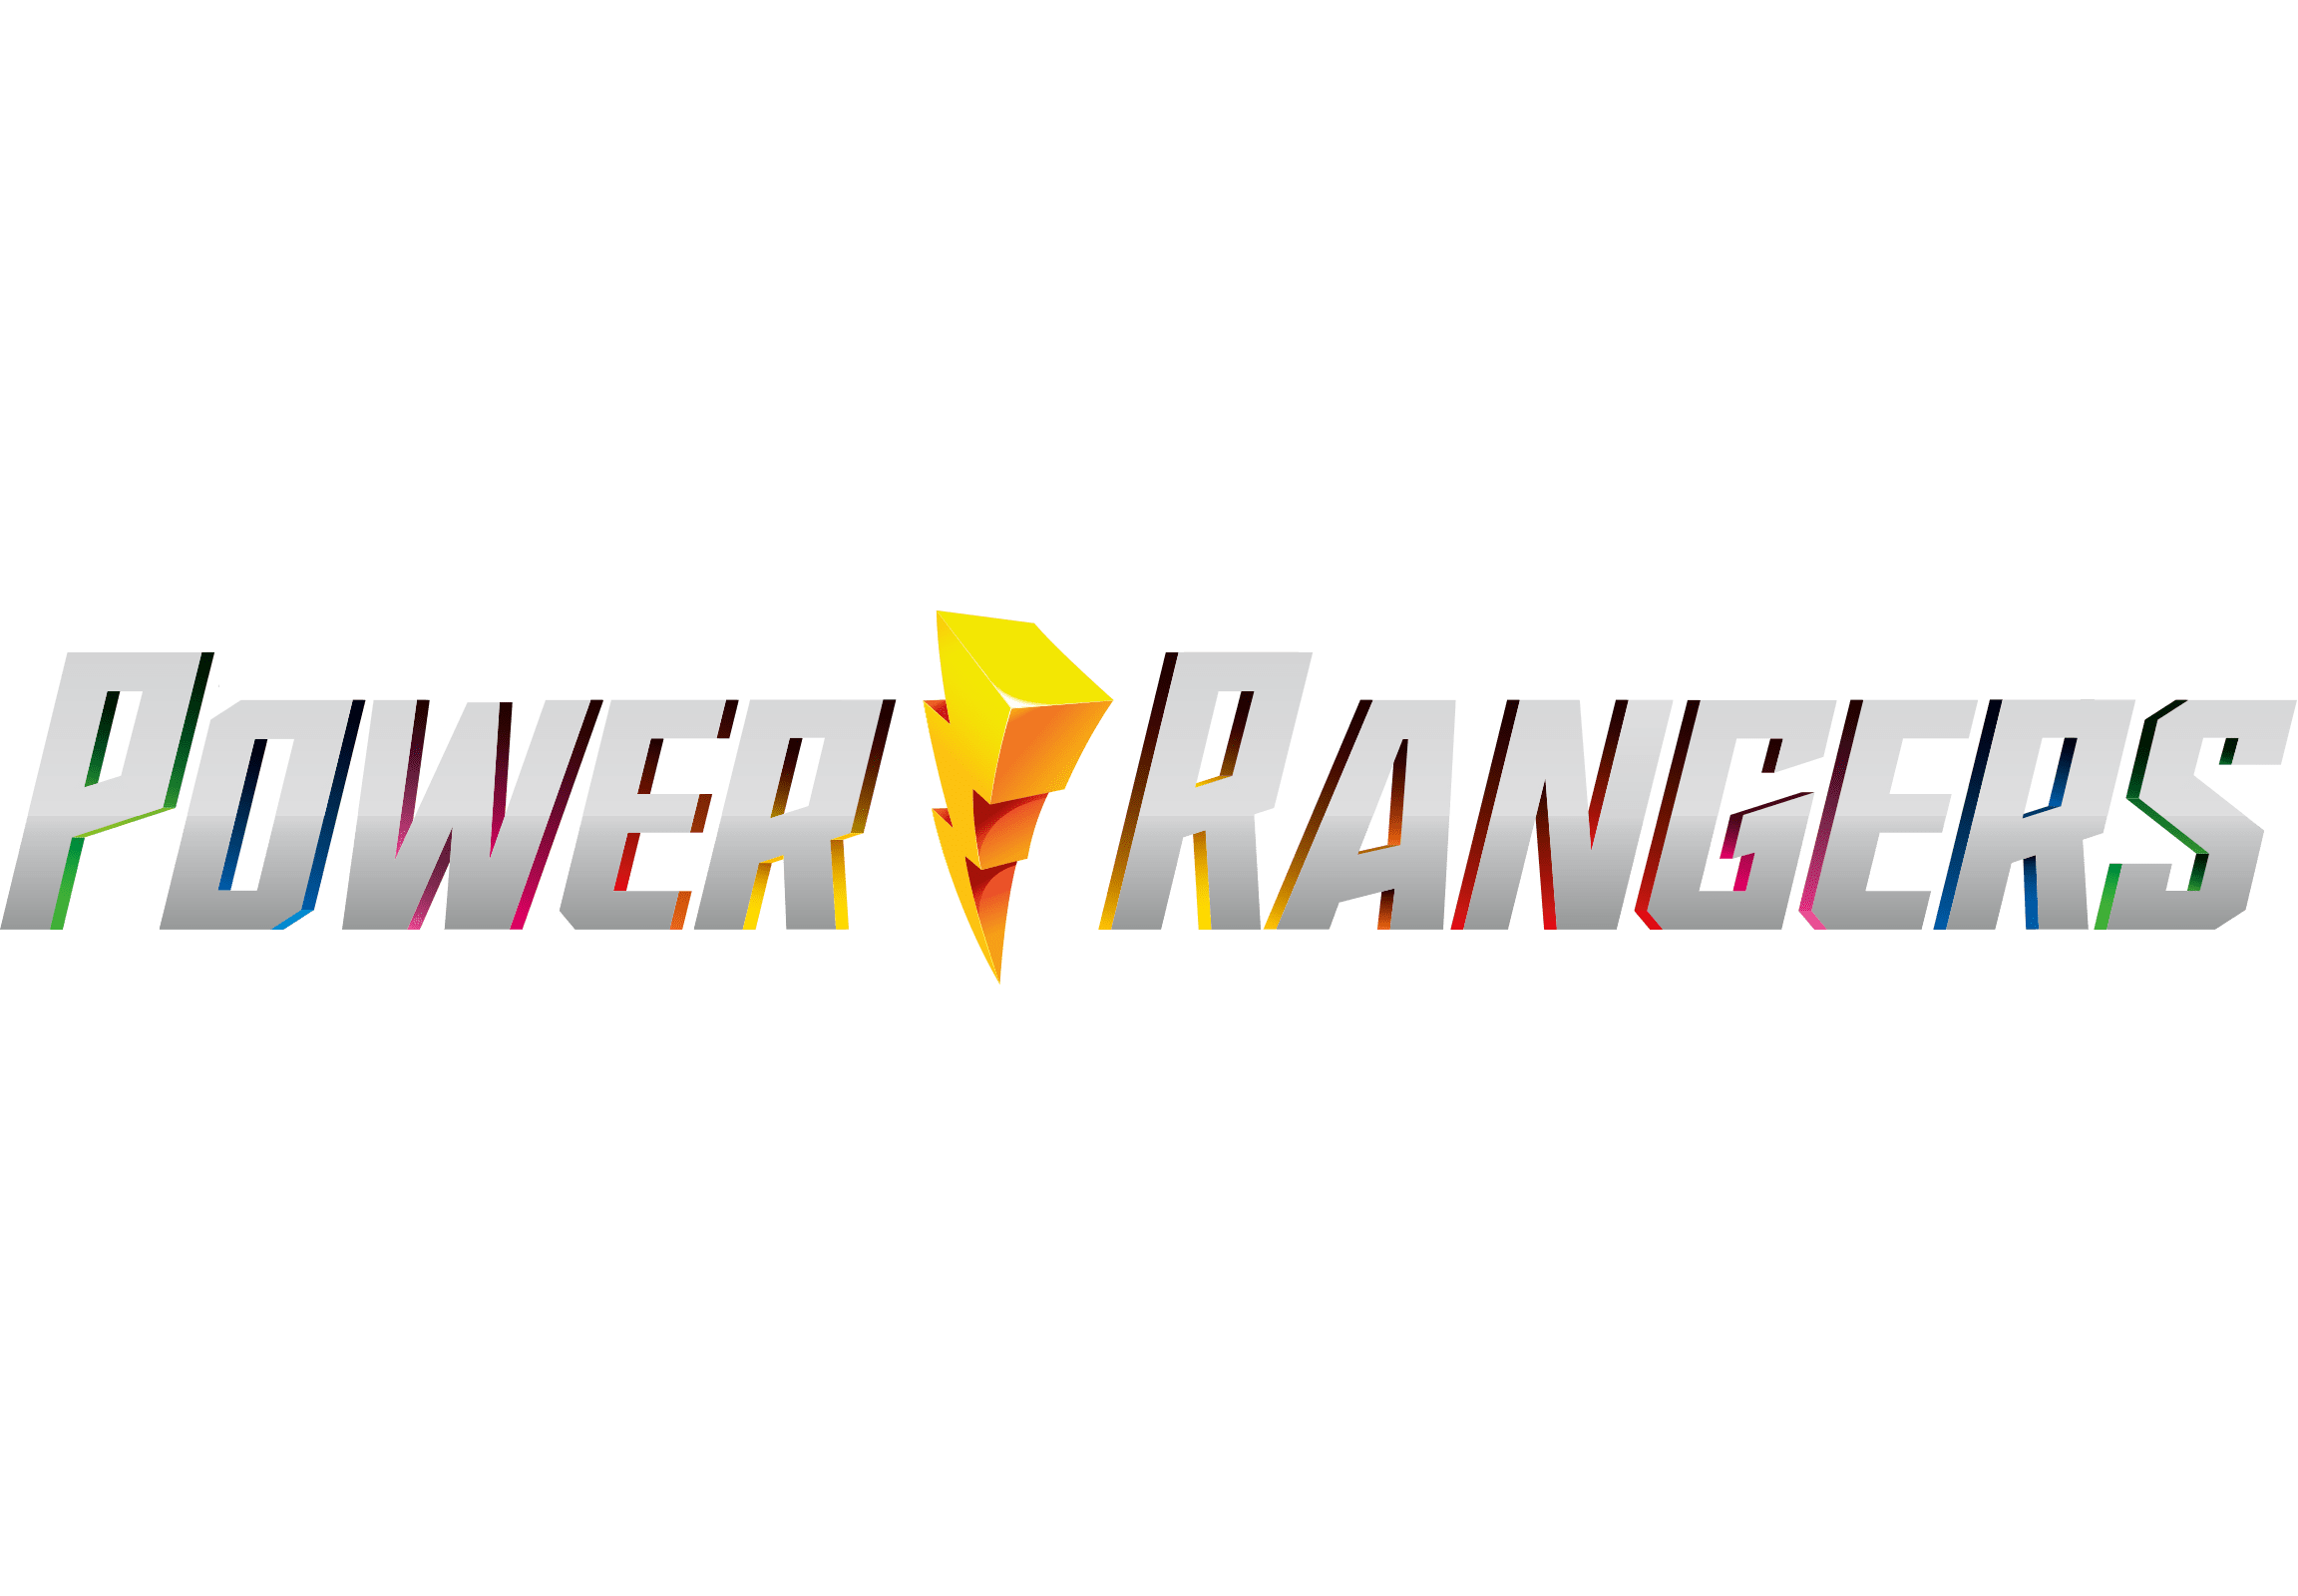 Power-Rangers-logo.png